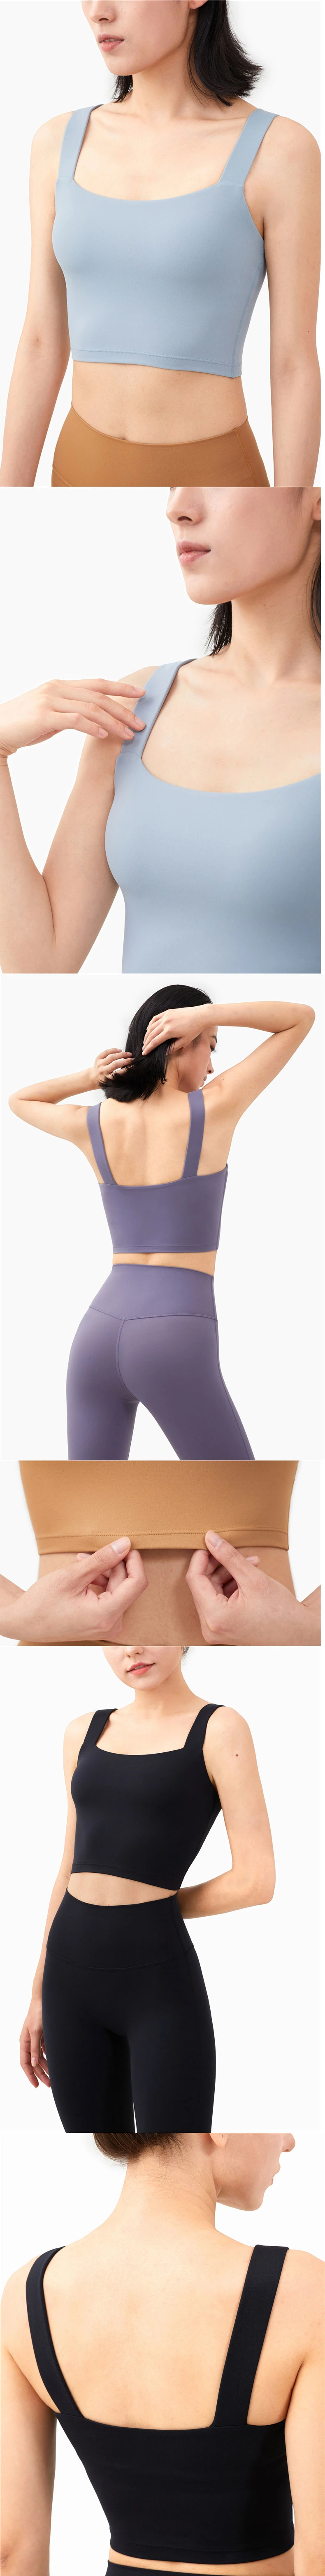 Breathable Sports Underwear Women Quick-Drying Shockproof Yoga Running Fitness Bra